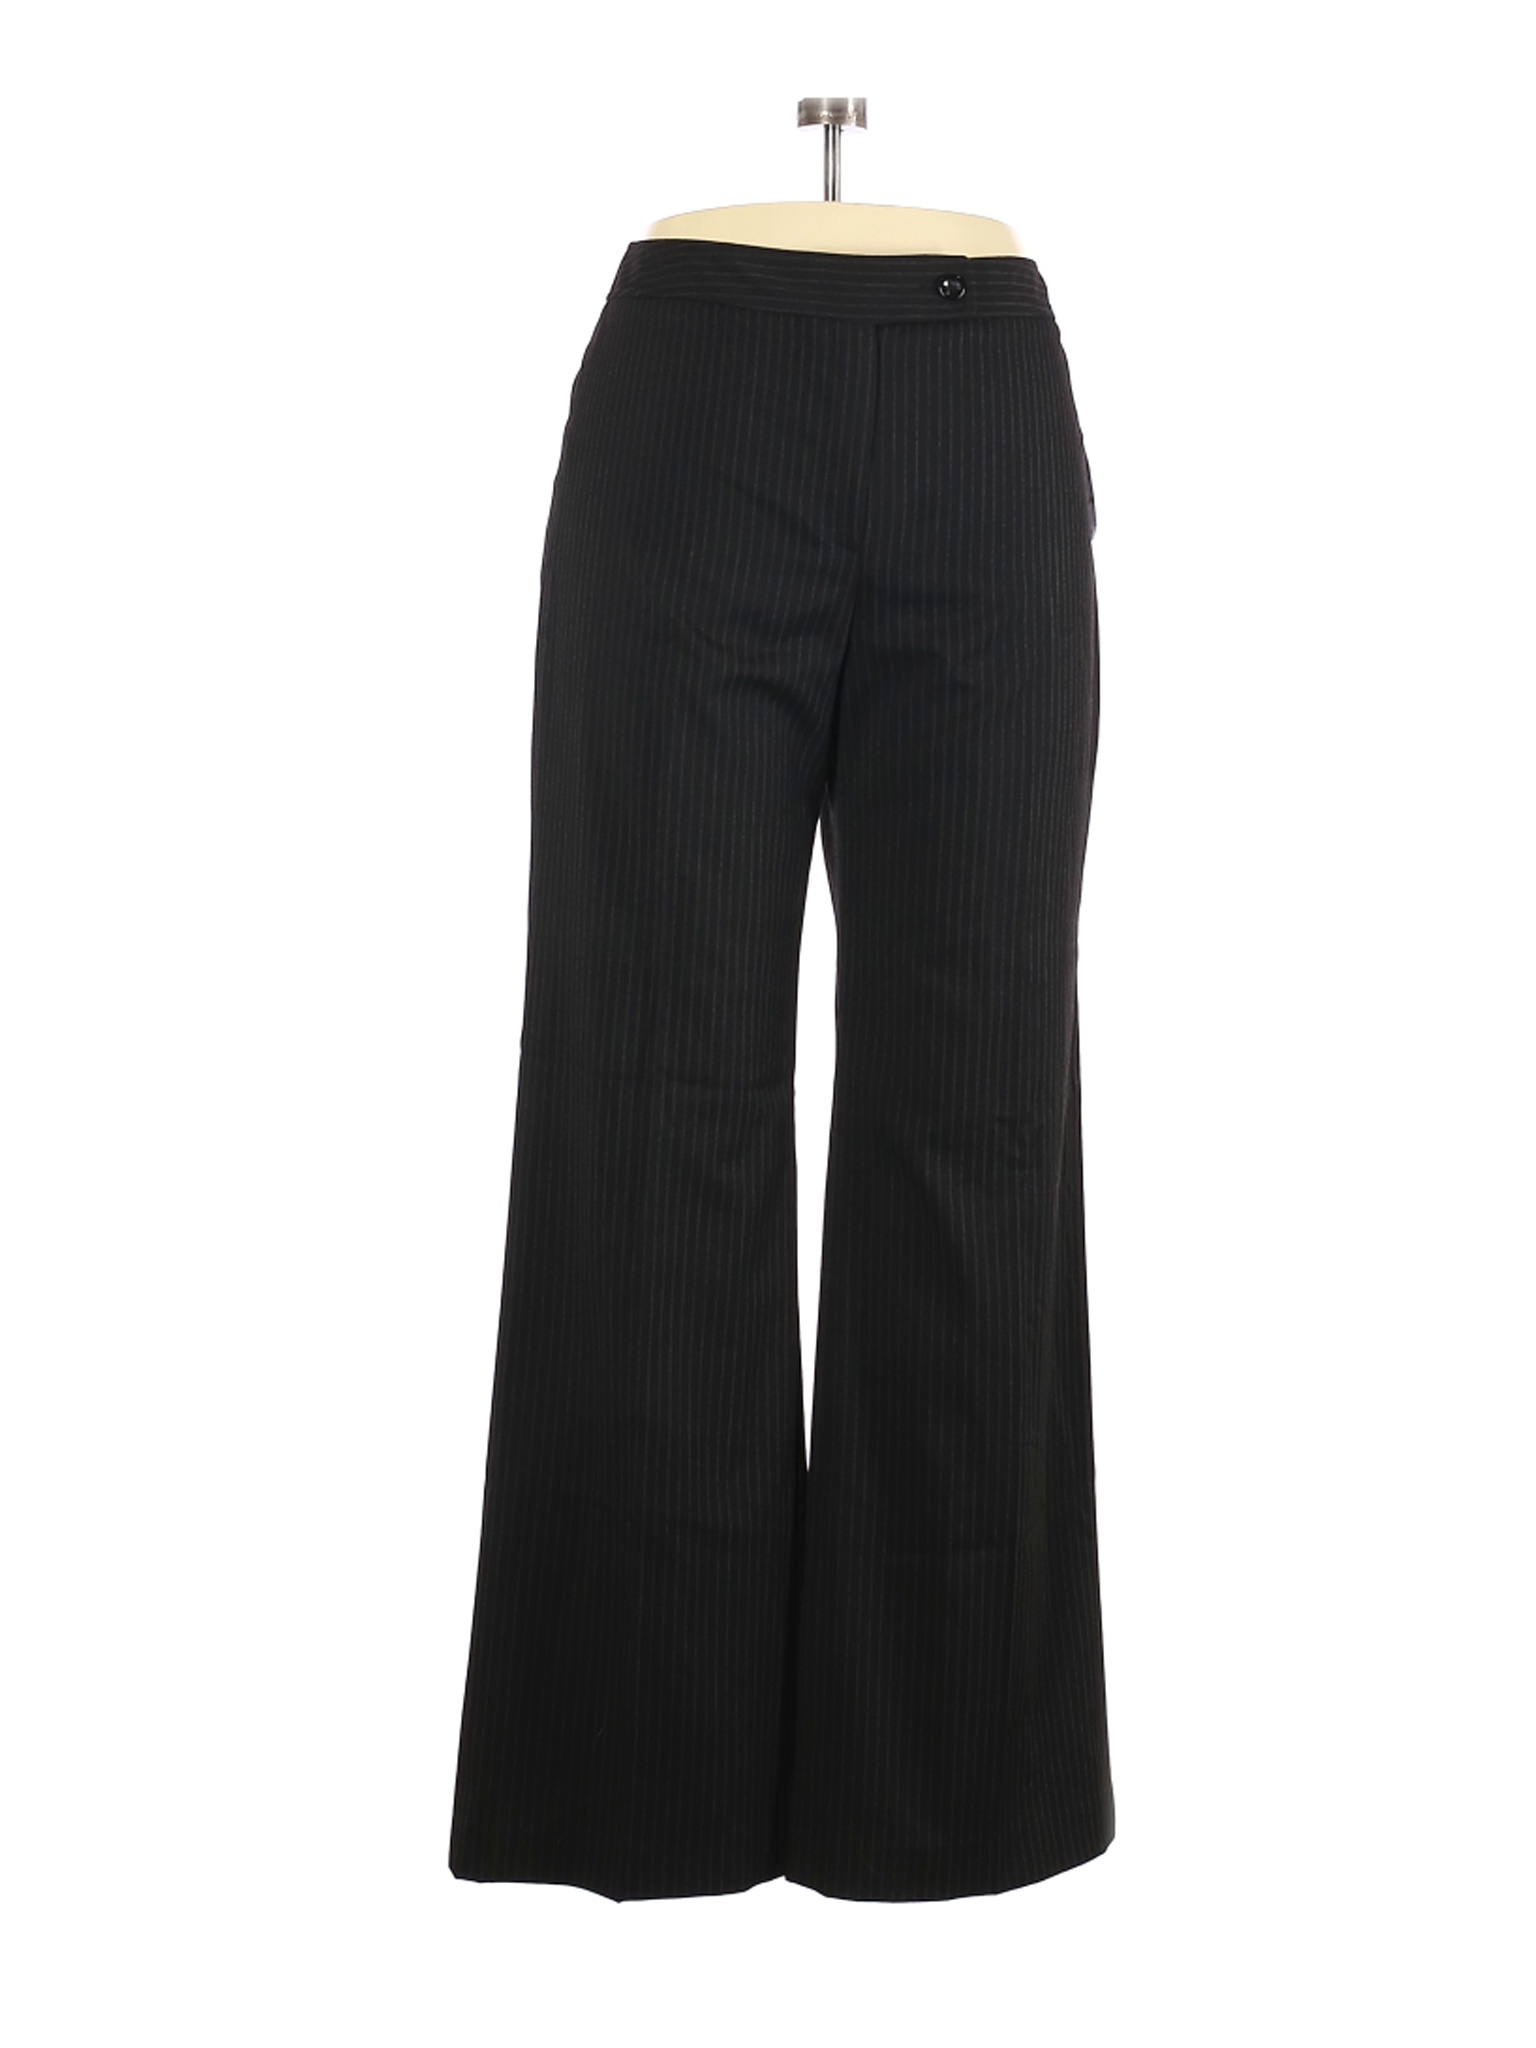 NWT Evan Picone Women Black Dress Pants 14 | eBay